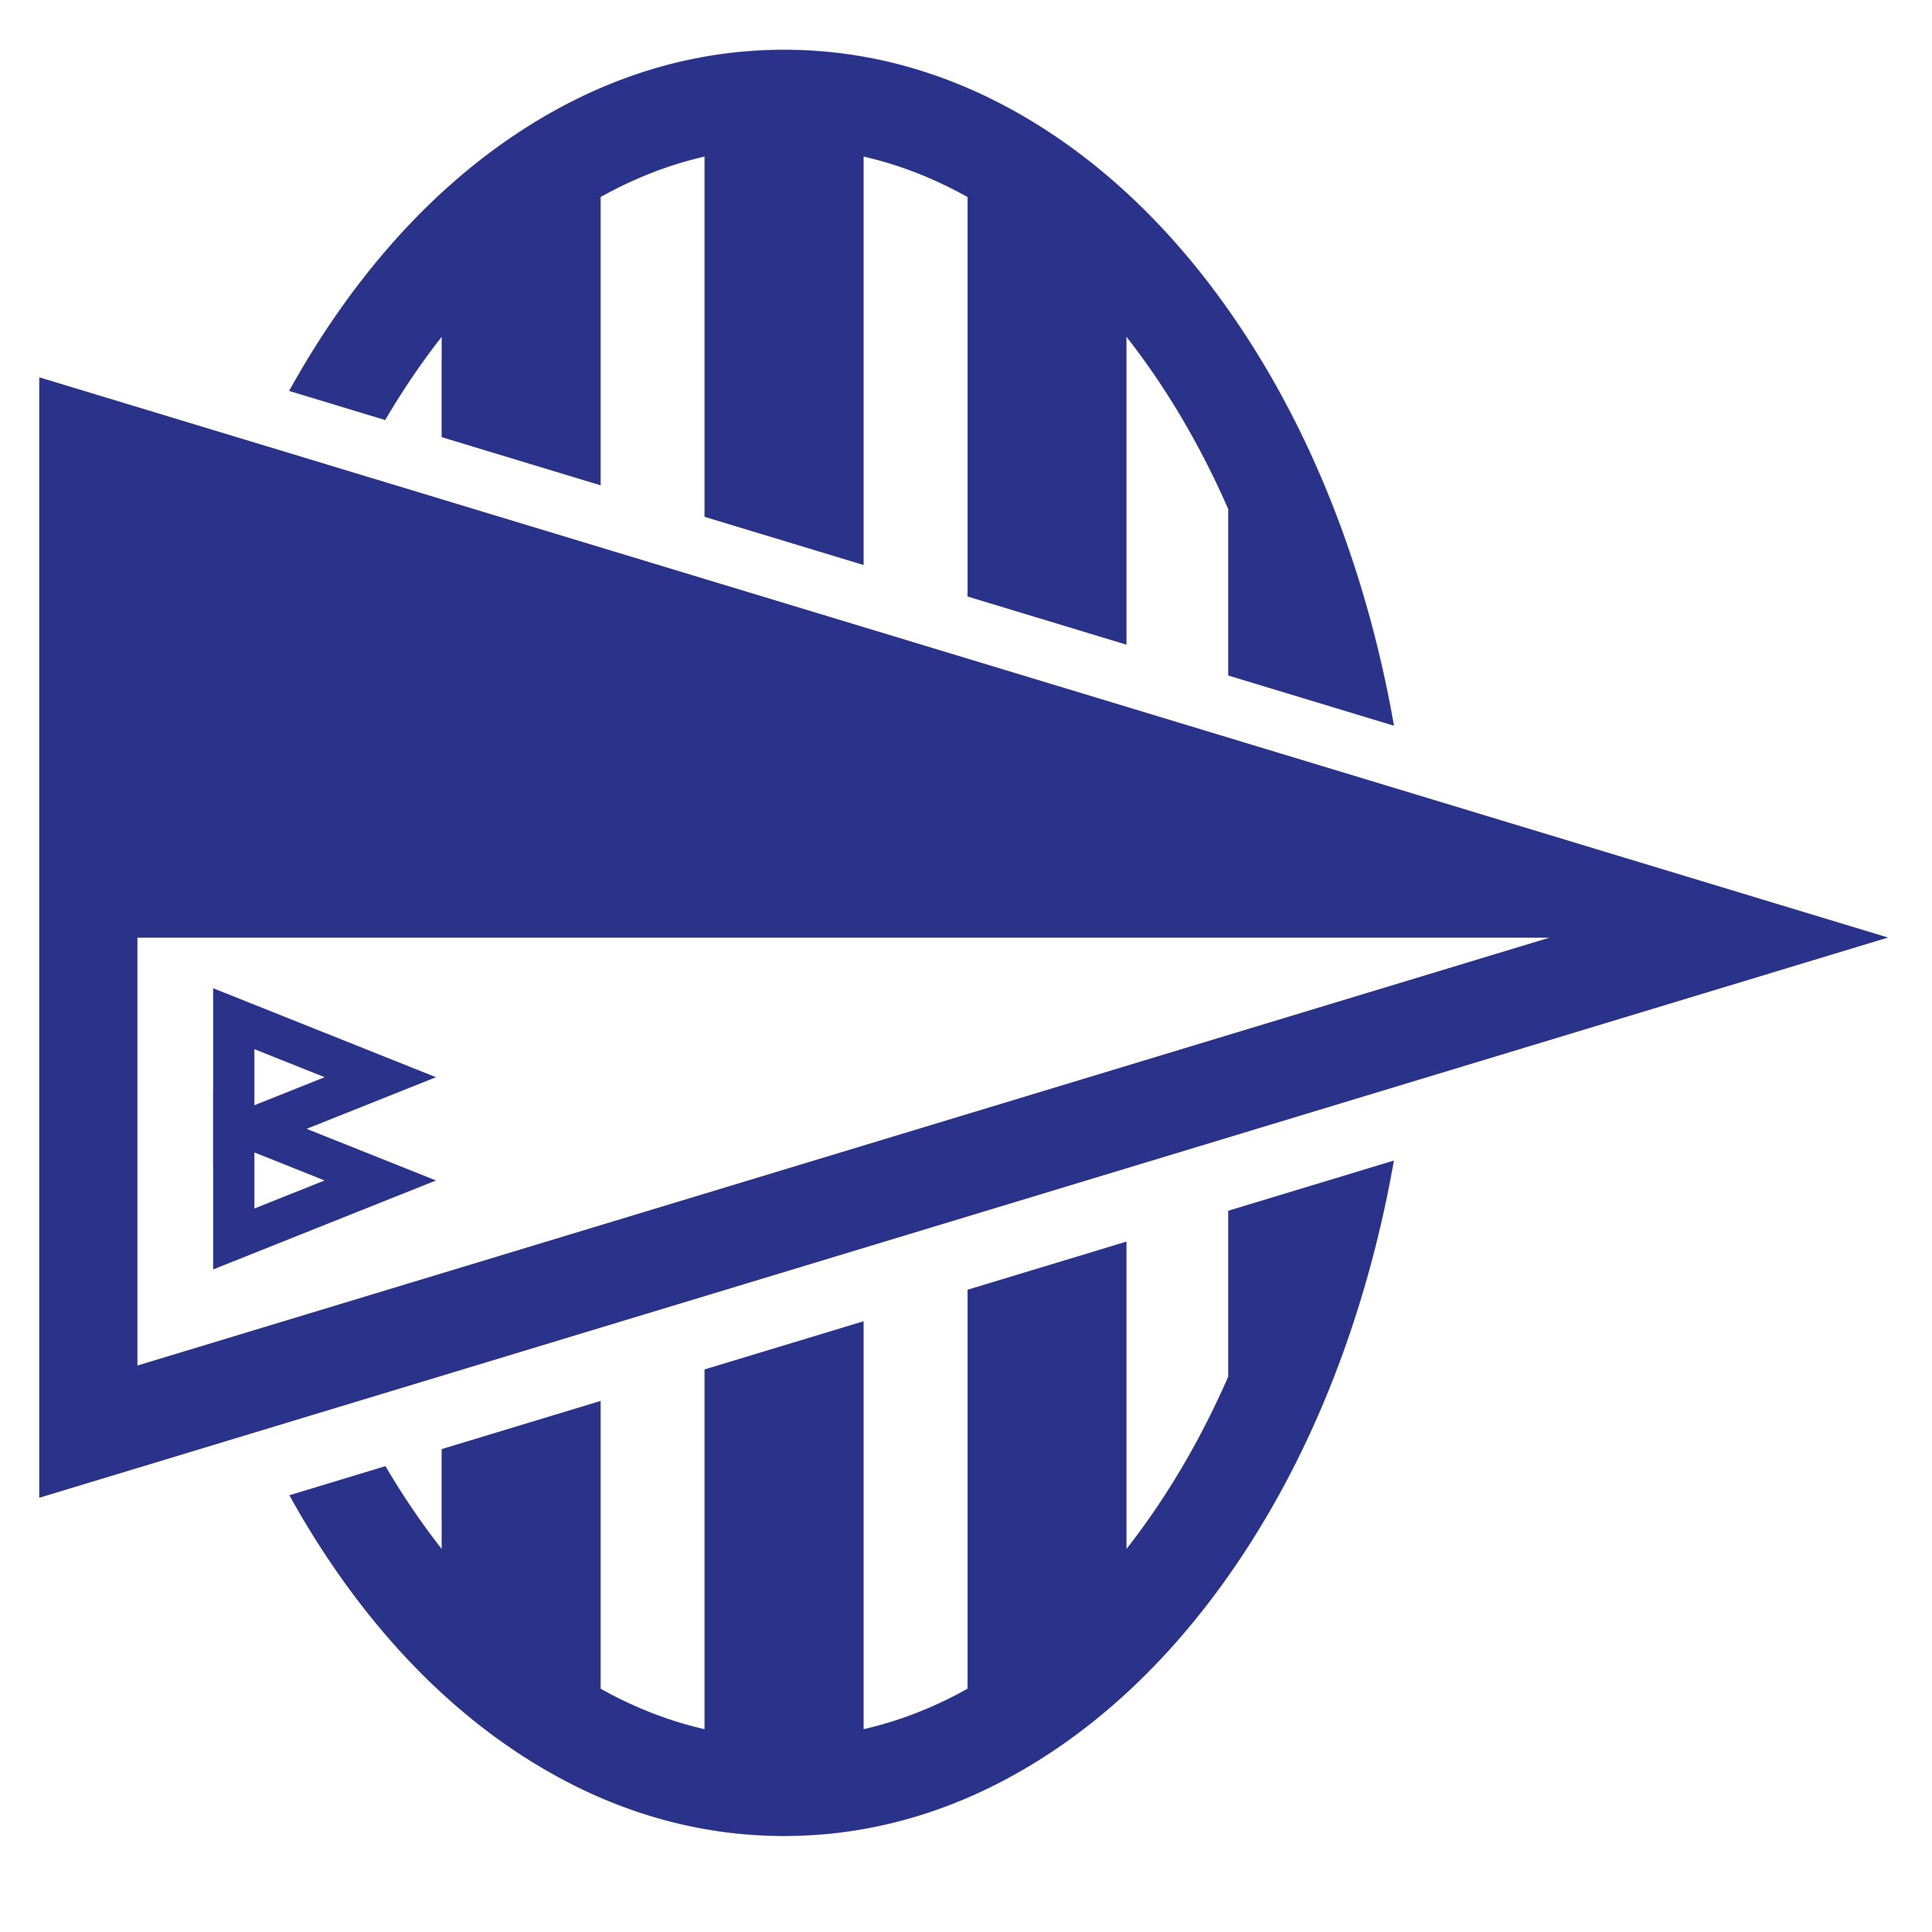 Caledonian Braves  logo design by logo designer Blue Deer Design for your inspiration and for the worlds largest logo competition